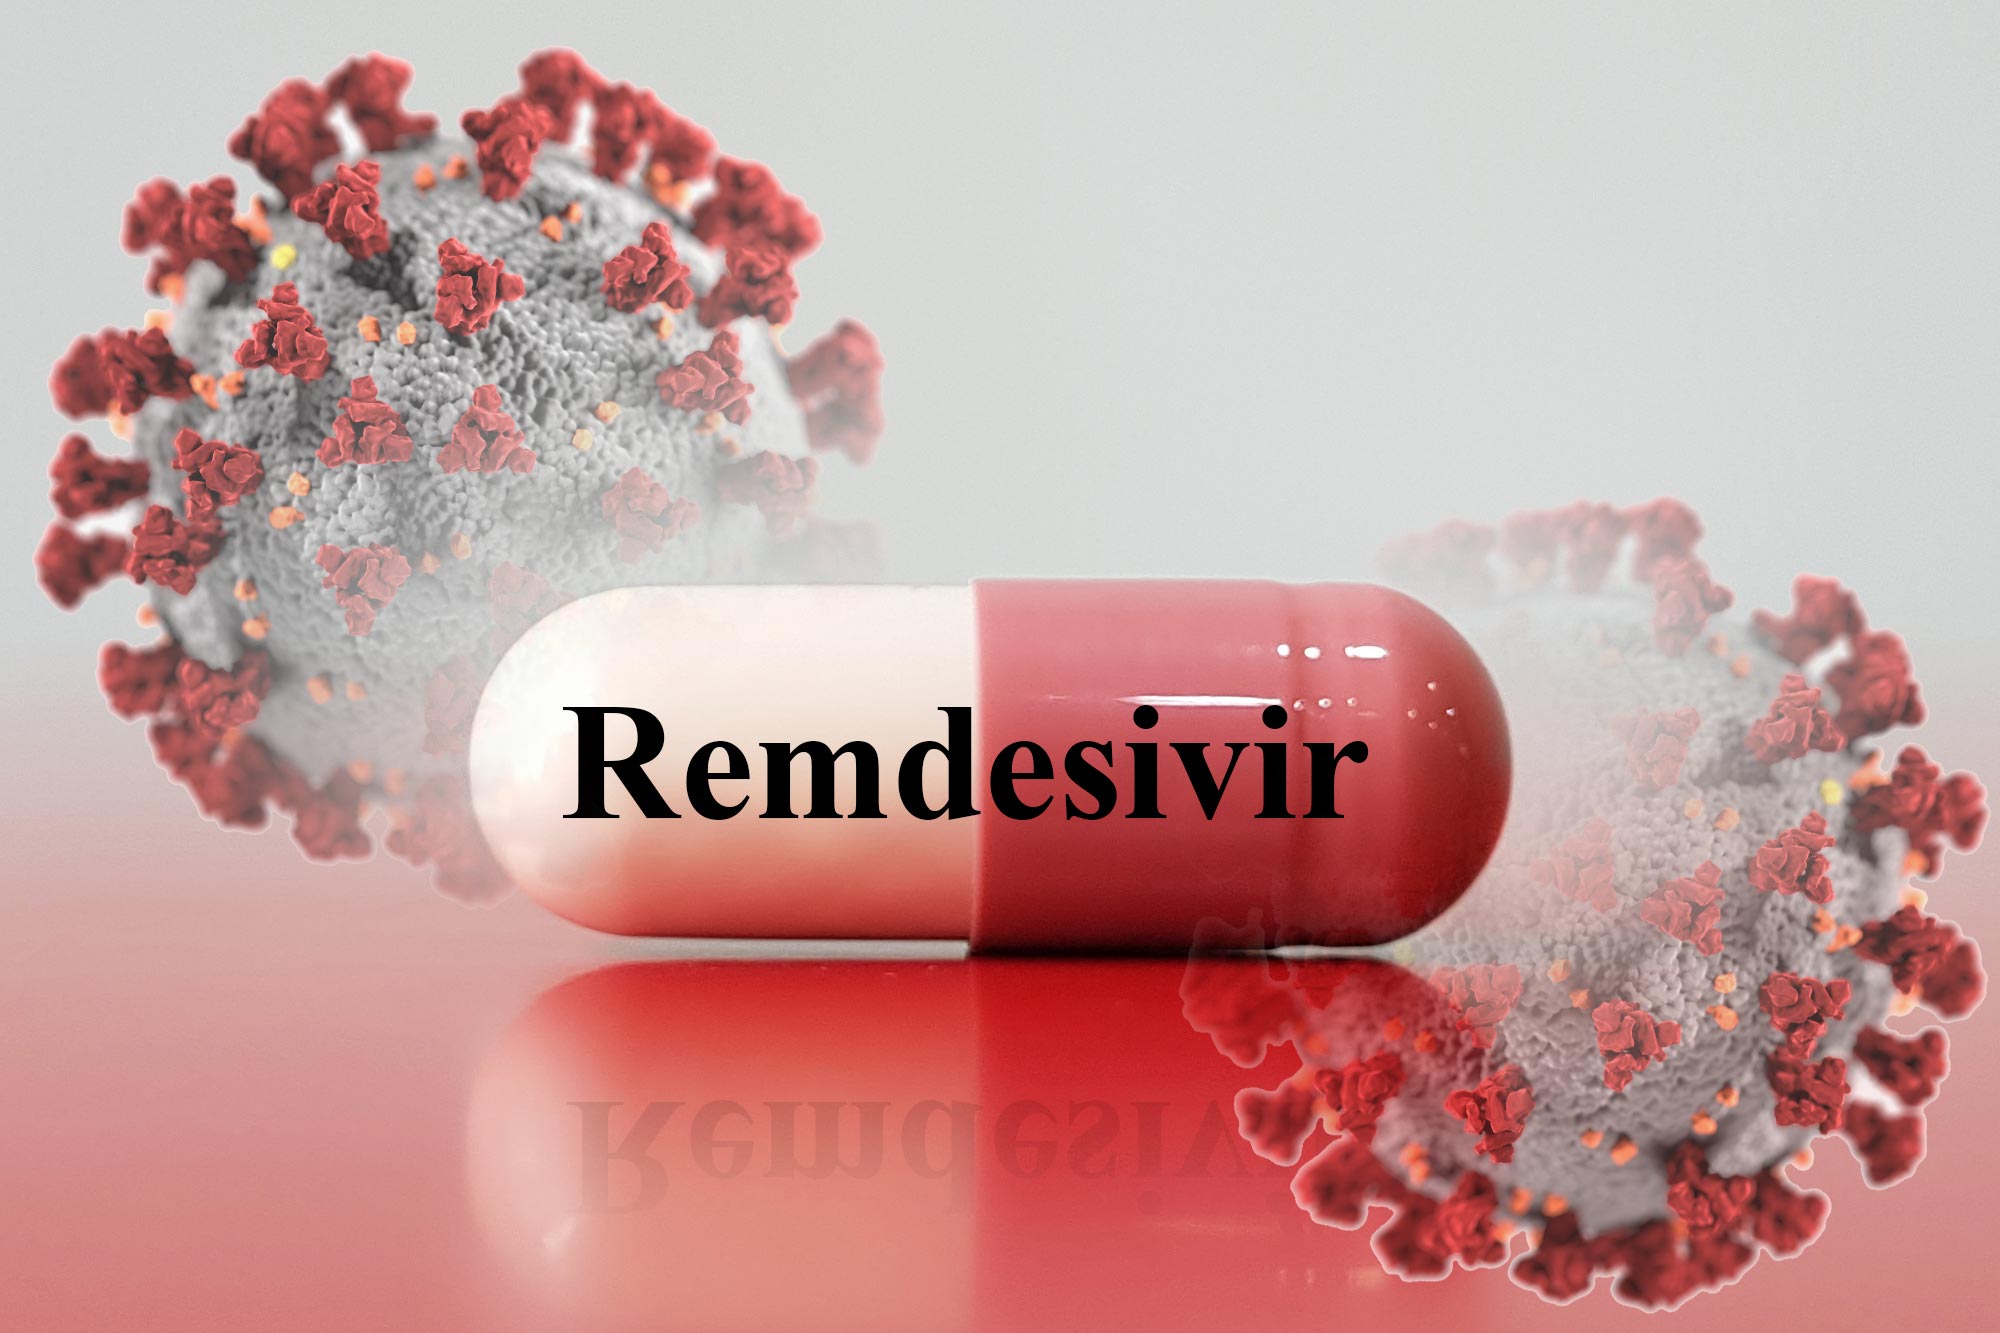 Hopeful" Results Using Antiviral Drug Remdesivir to Treat COVID-19